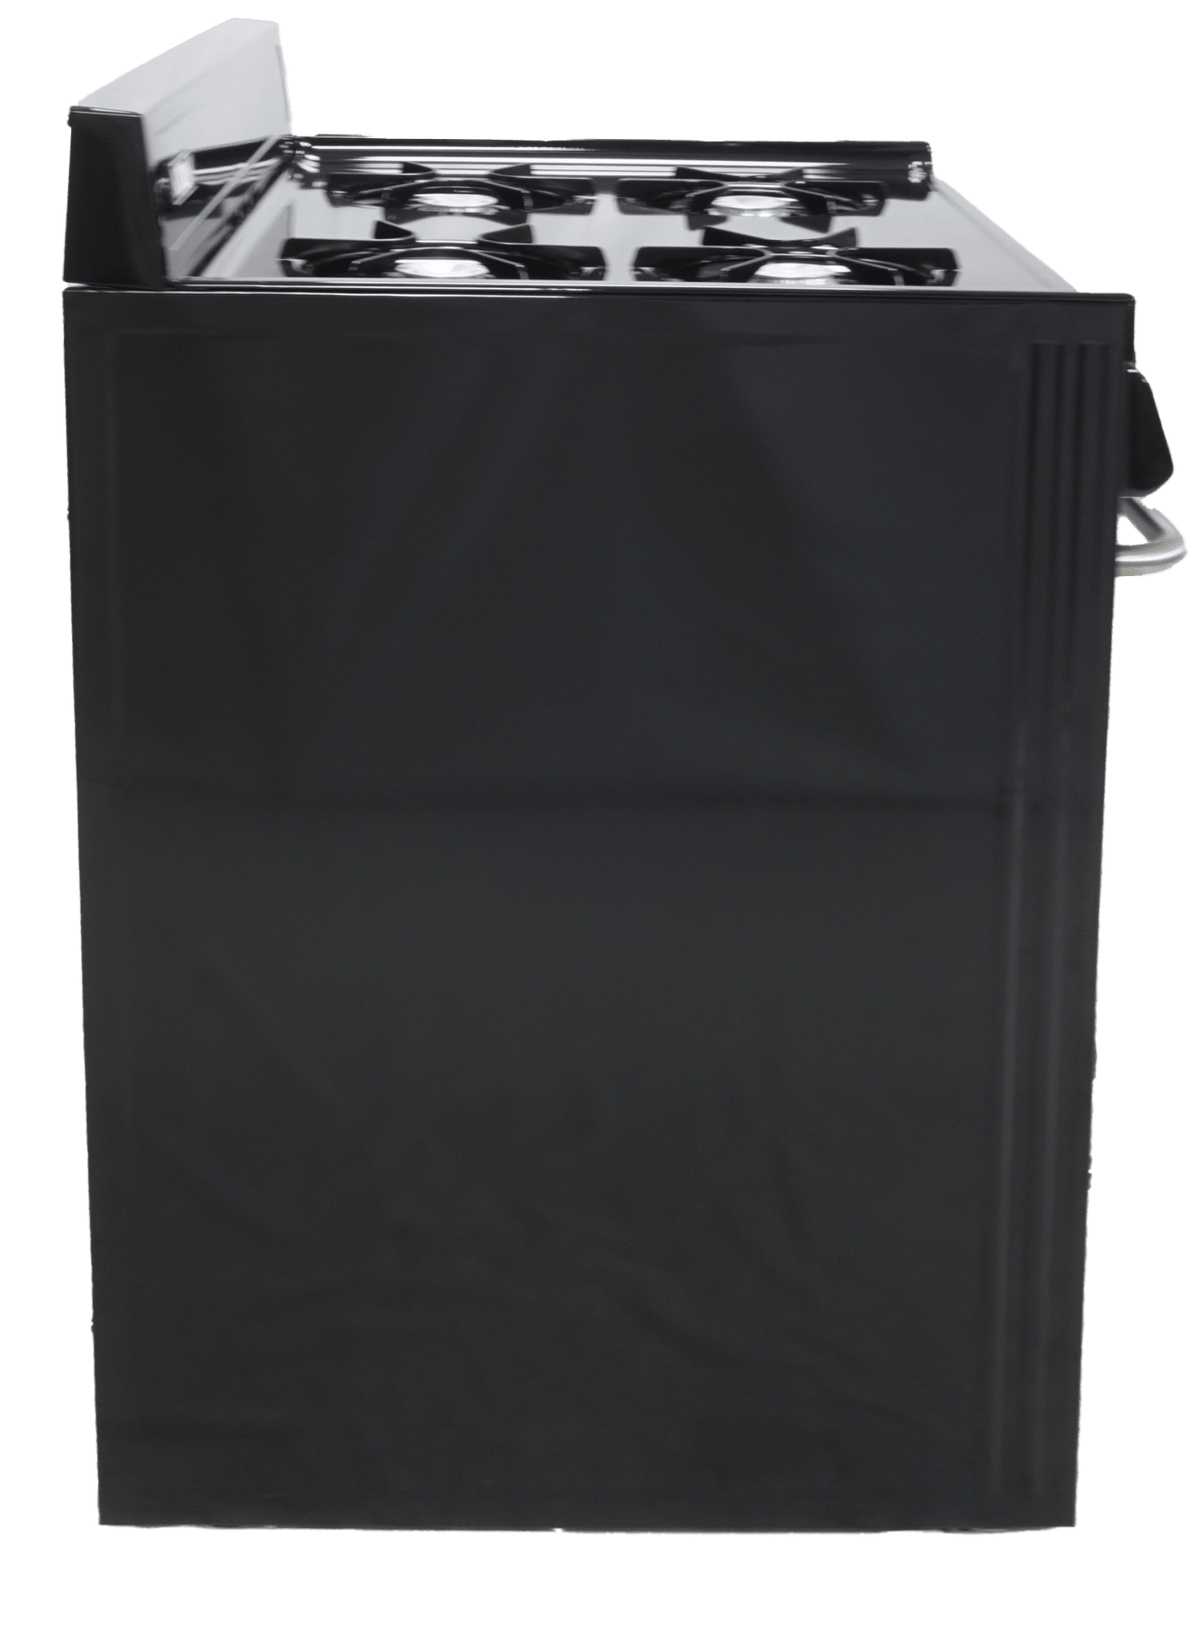 Ben&#39;s Discount Supply Propane Range /Stove Kodiak 24&quot; Propane Range (Black) - Battery Ignition with Viewing Window TLM610-CPV